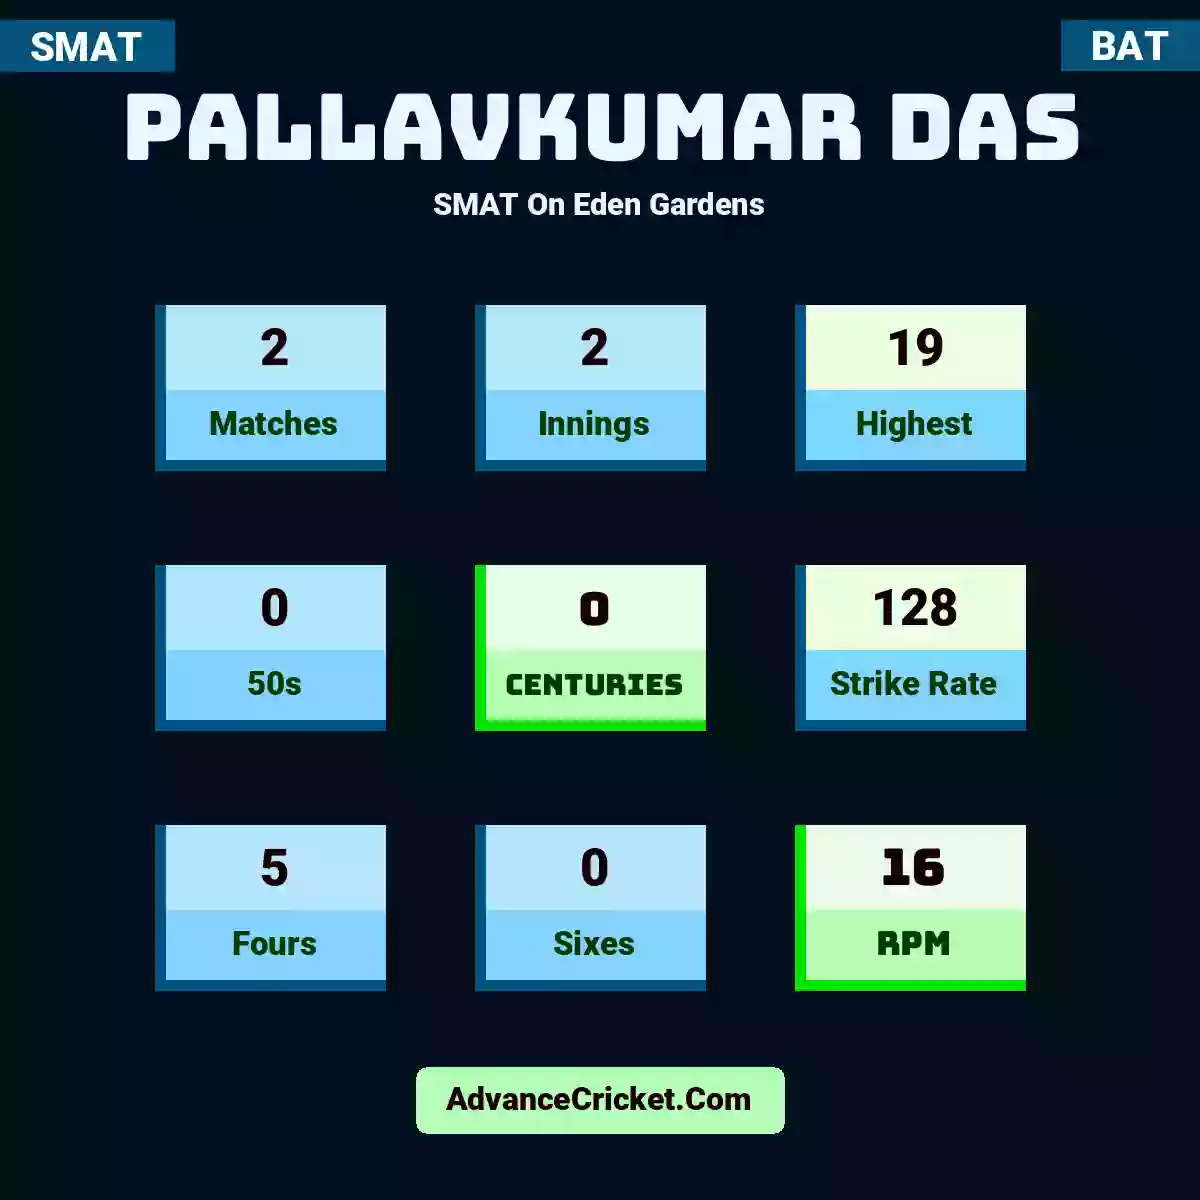 Pallavkumar Das SMAT  On Eden Gardens, Pallavkumar Das played 2 matches, scored 19 runs as highest, 0 half-centuries, and 0 centuries, with a strike rate of 128. P.Das hit 5 fours and 0 sixes, with an RPM of 16.